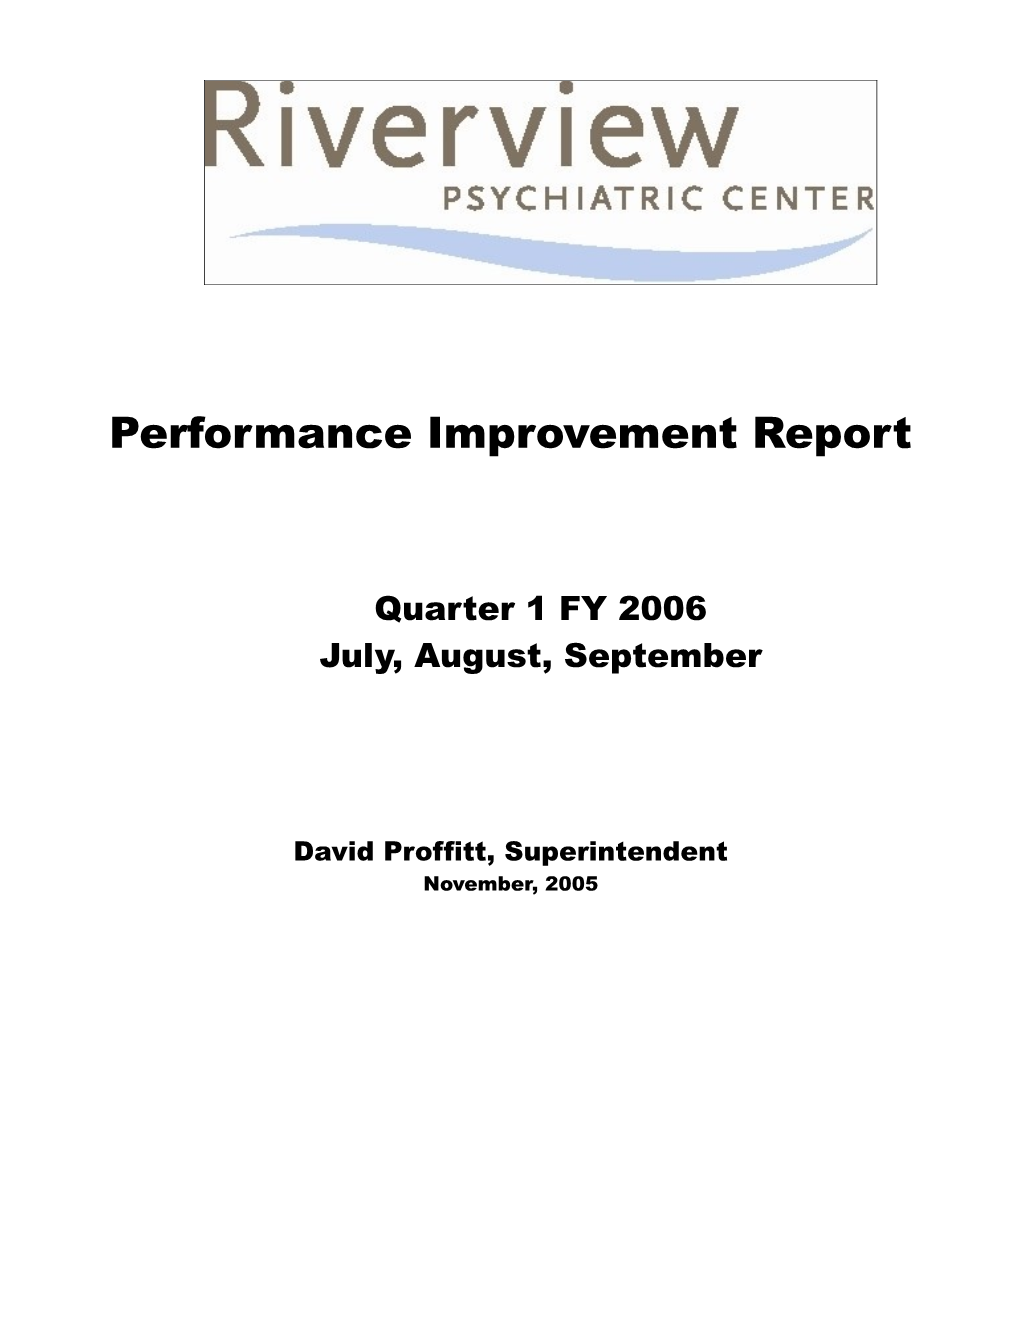 Performance Improvement Report s1